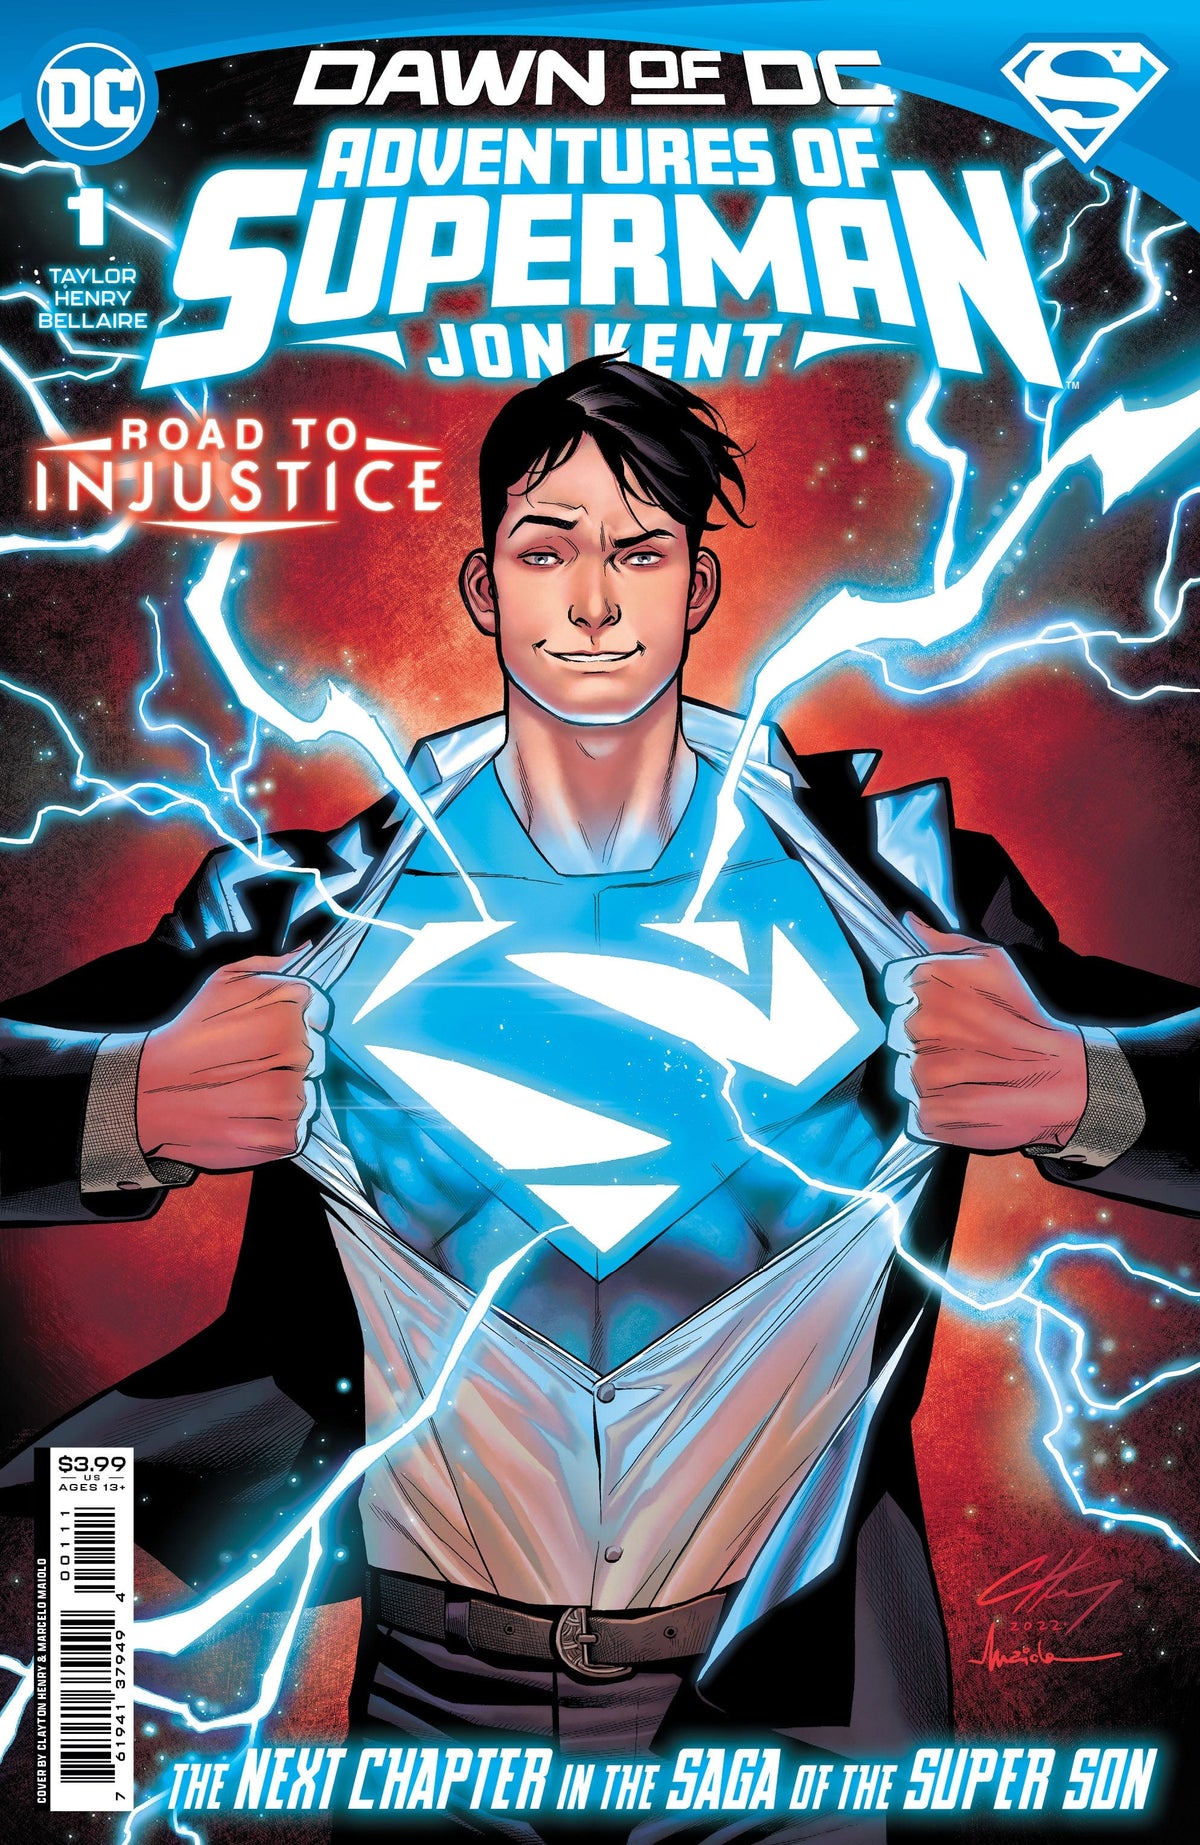 ADVENTURES OF SUPERMAN JON KENT #1 (OF 6) CVR A CLAYTON HENRY - Third Eye